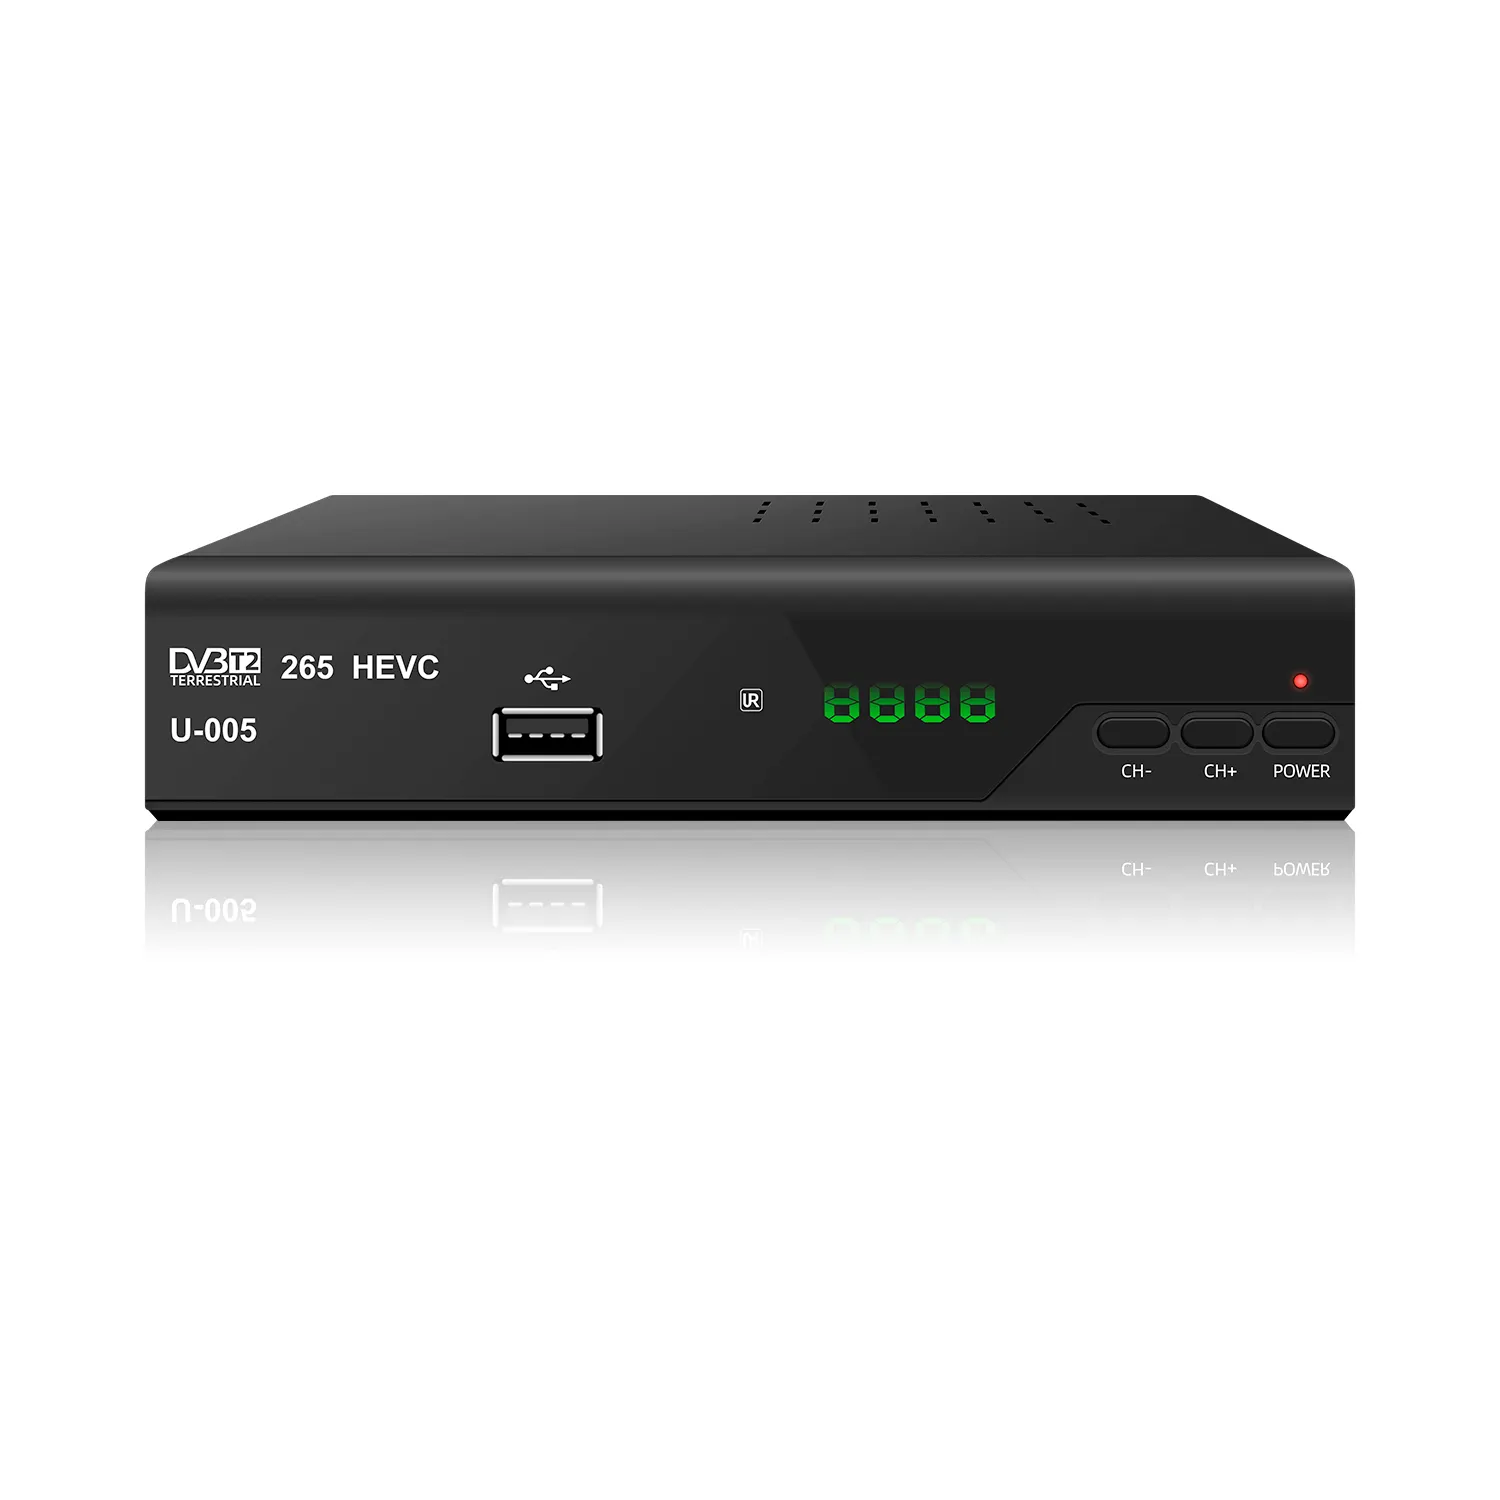 Fta hd 1080 p DVB-T2 set top box free to air mini tv canali decoder time shift media player dvb-t2